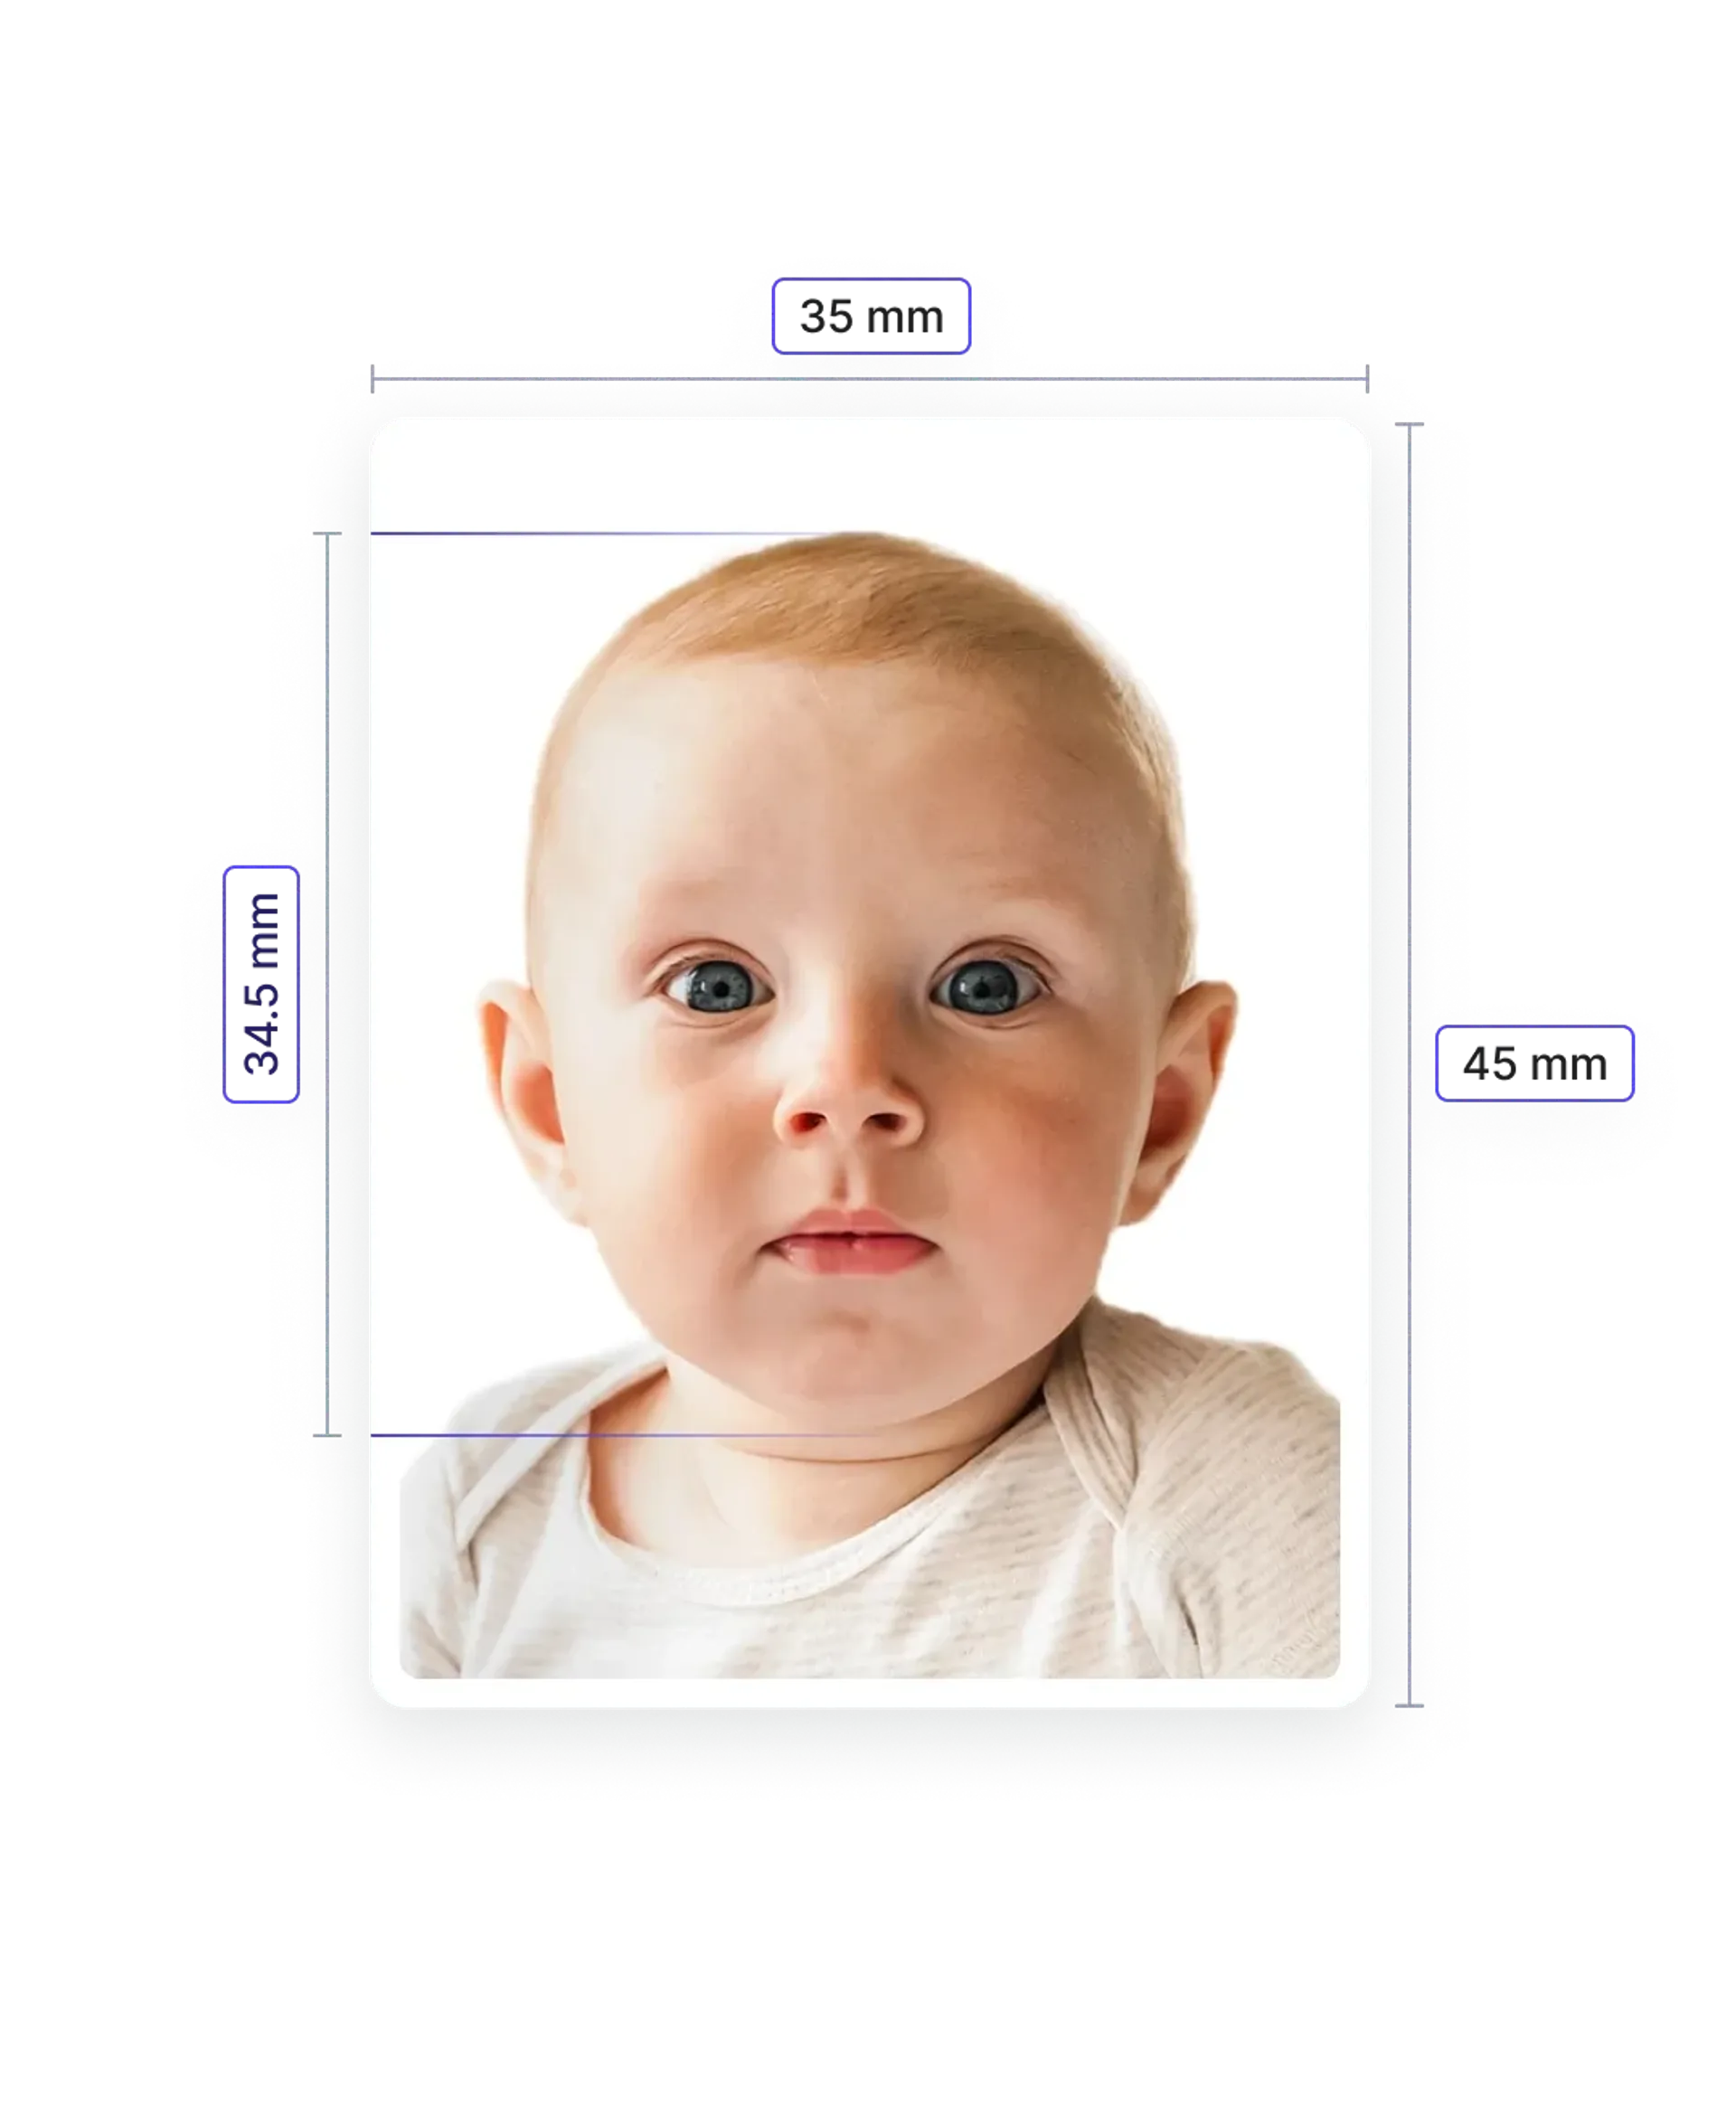 Baby Passport Photo—Specifications